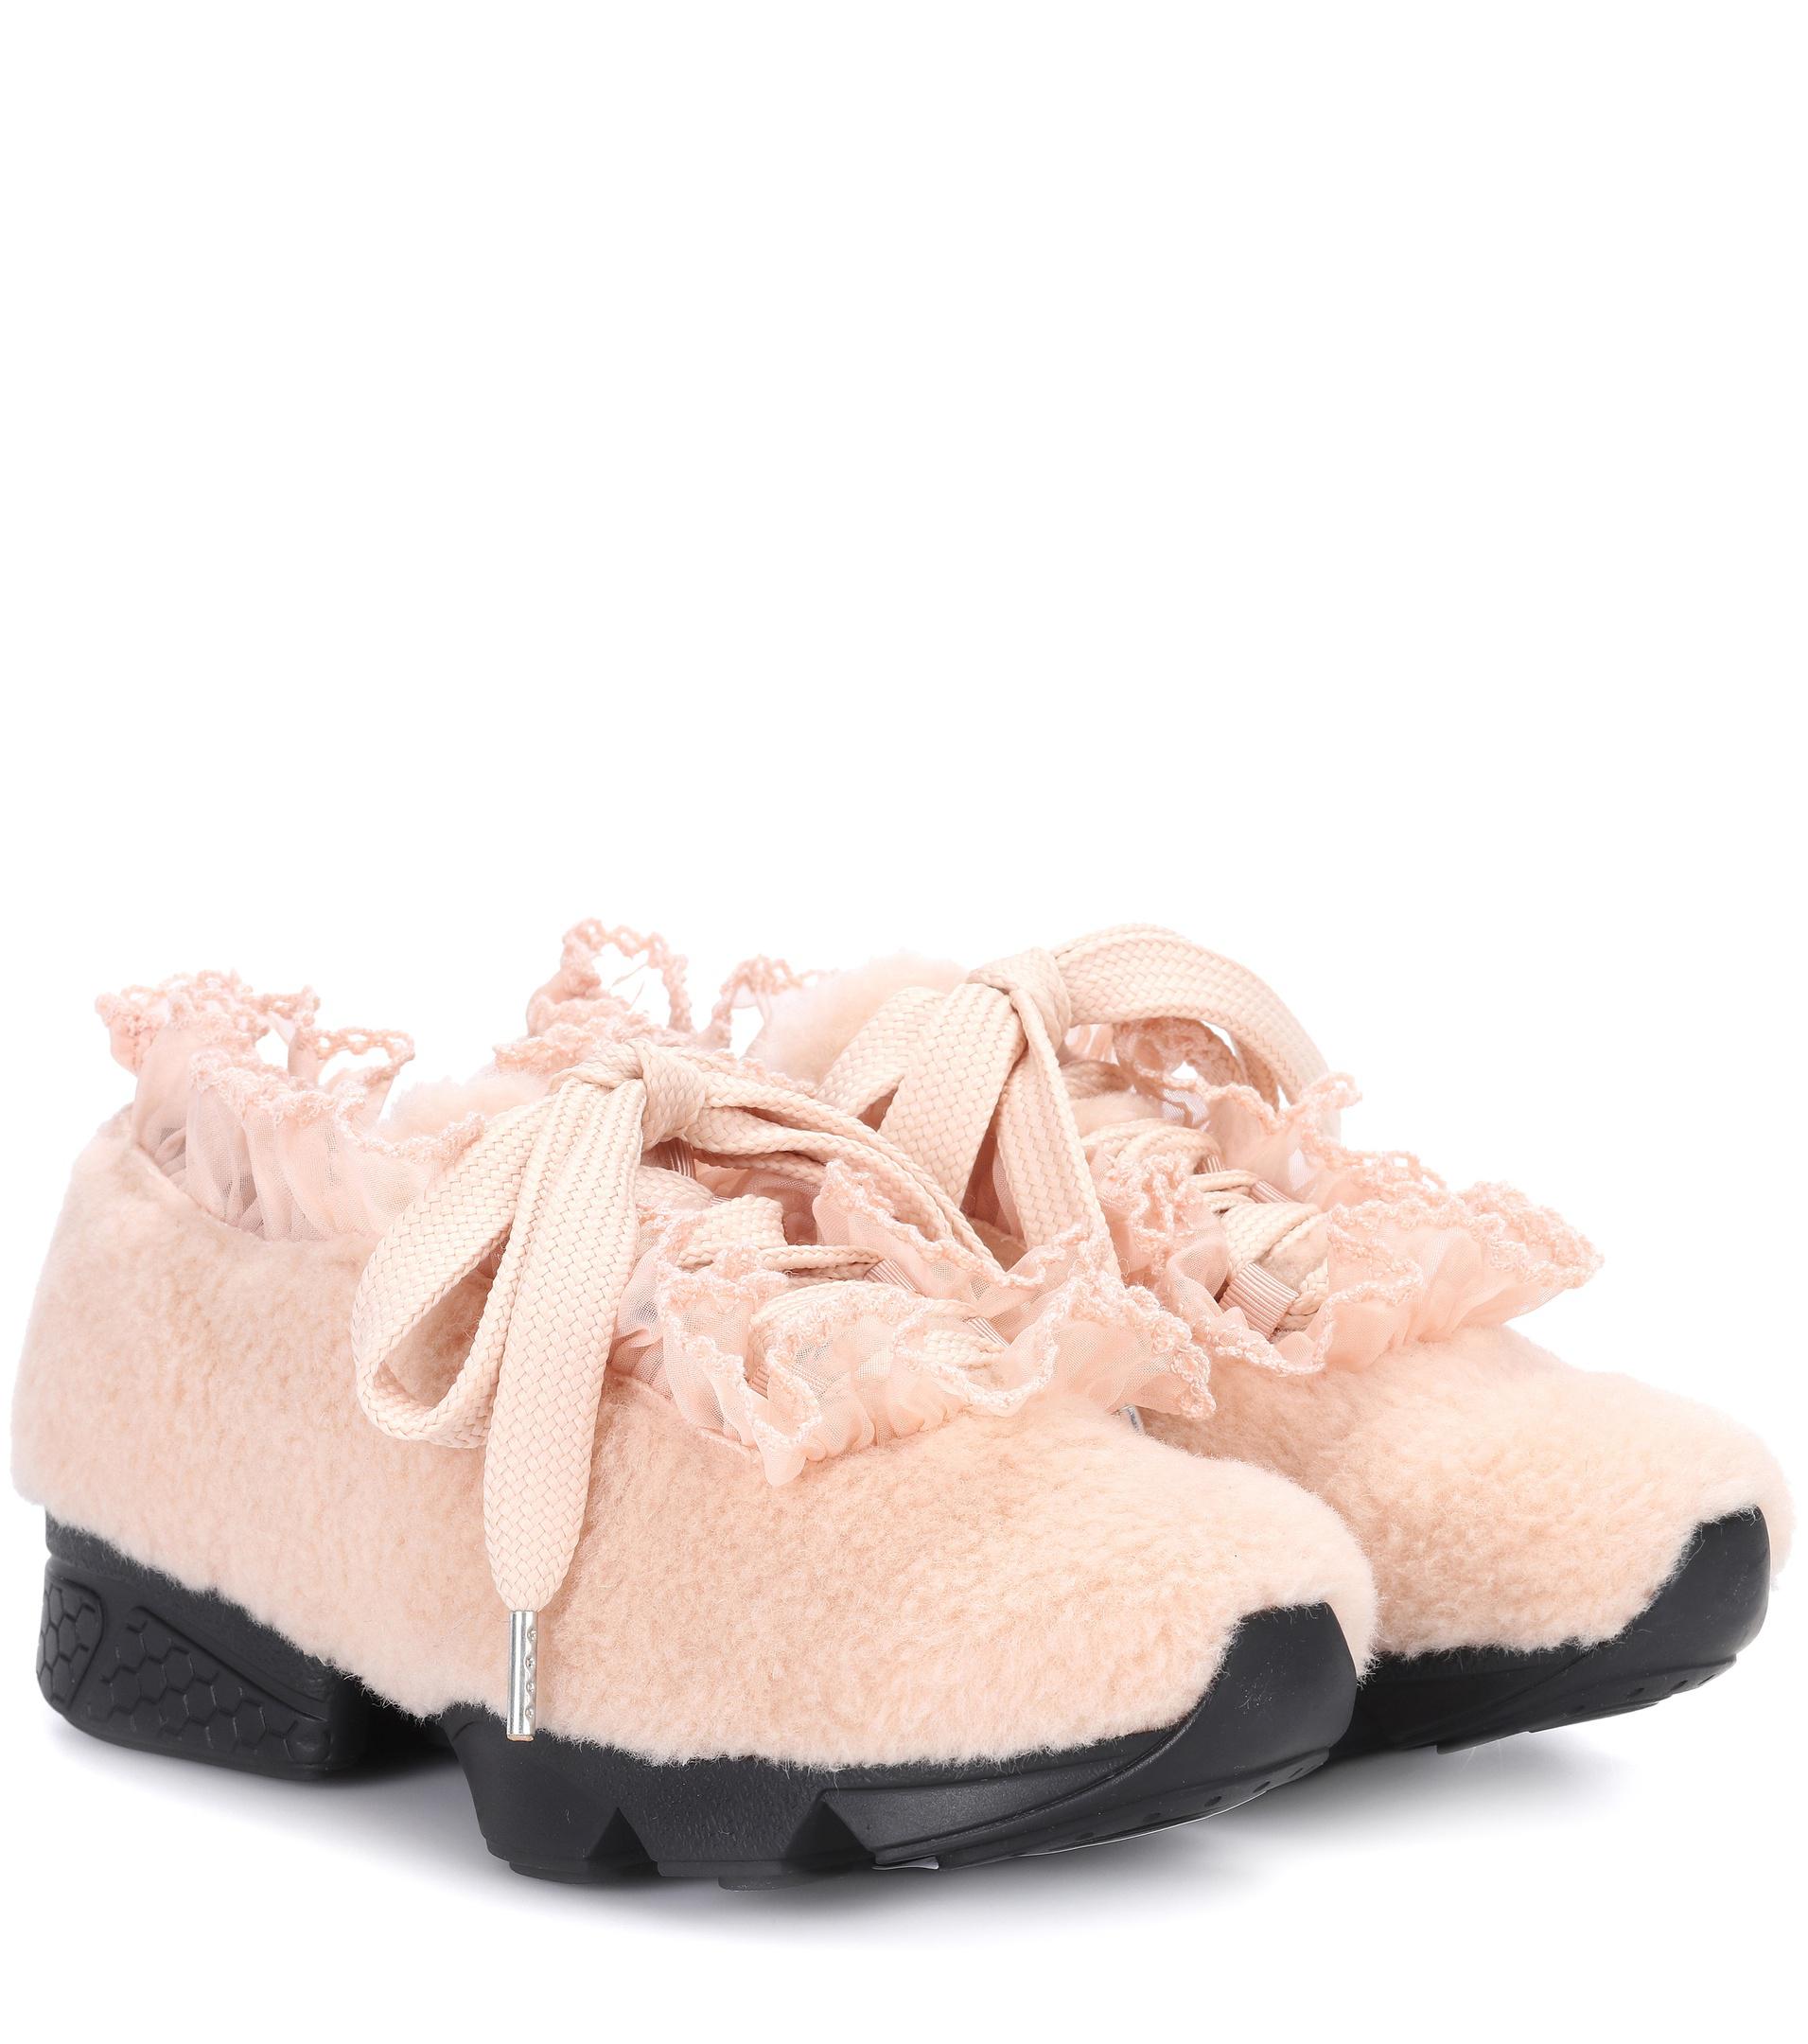 Ganni X Shrimps Fergus Seashell Sneakers in Pink - Lyst